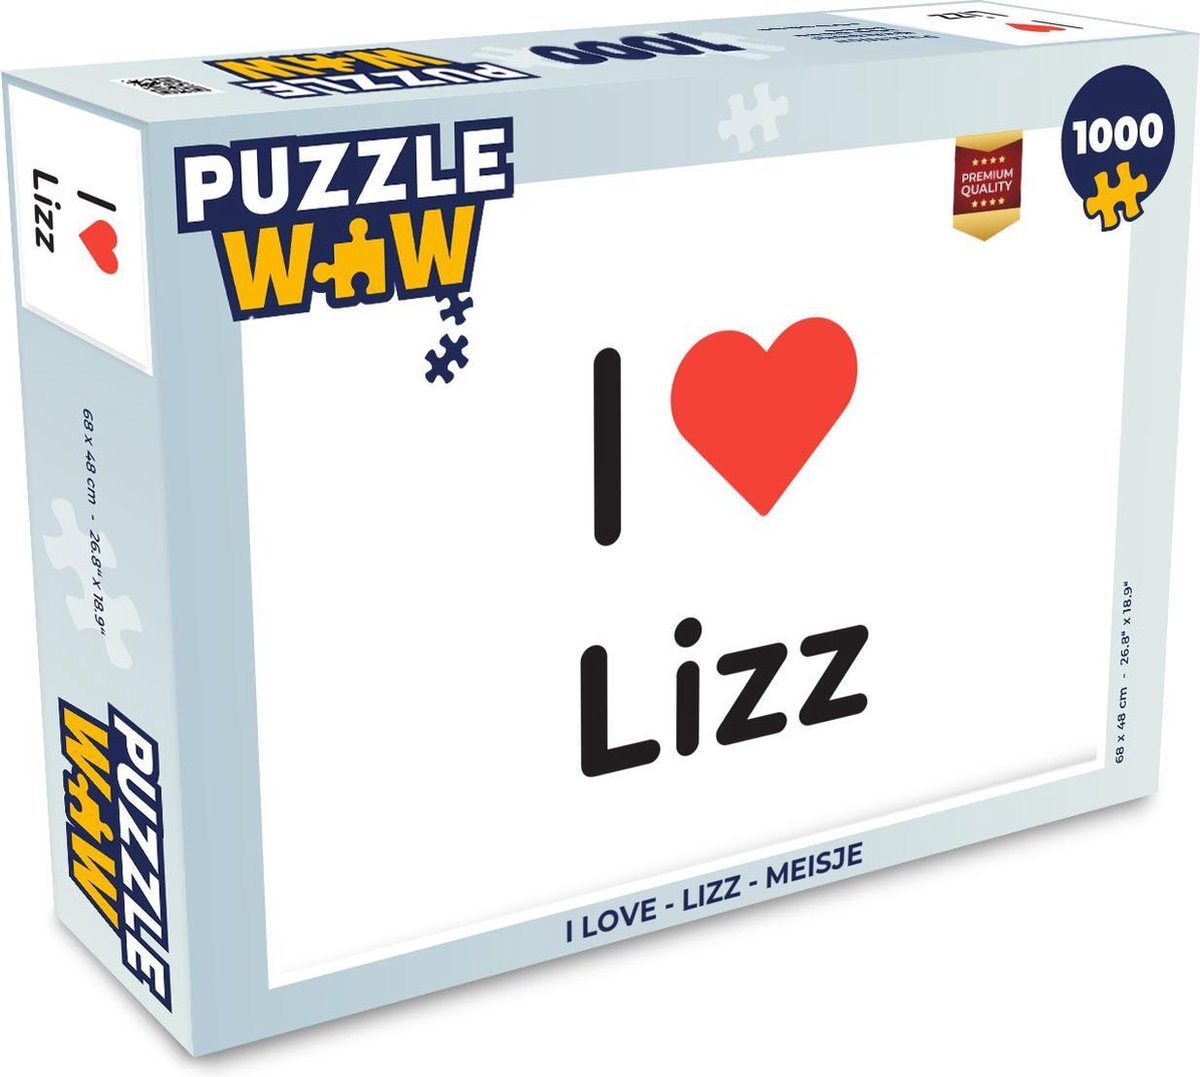 Afbeelding van product PuzzleWow  Puzzel I love - Lizz - Meisje - Legpuzzel - Puzzel 1000 stukjes volwassenen